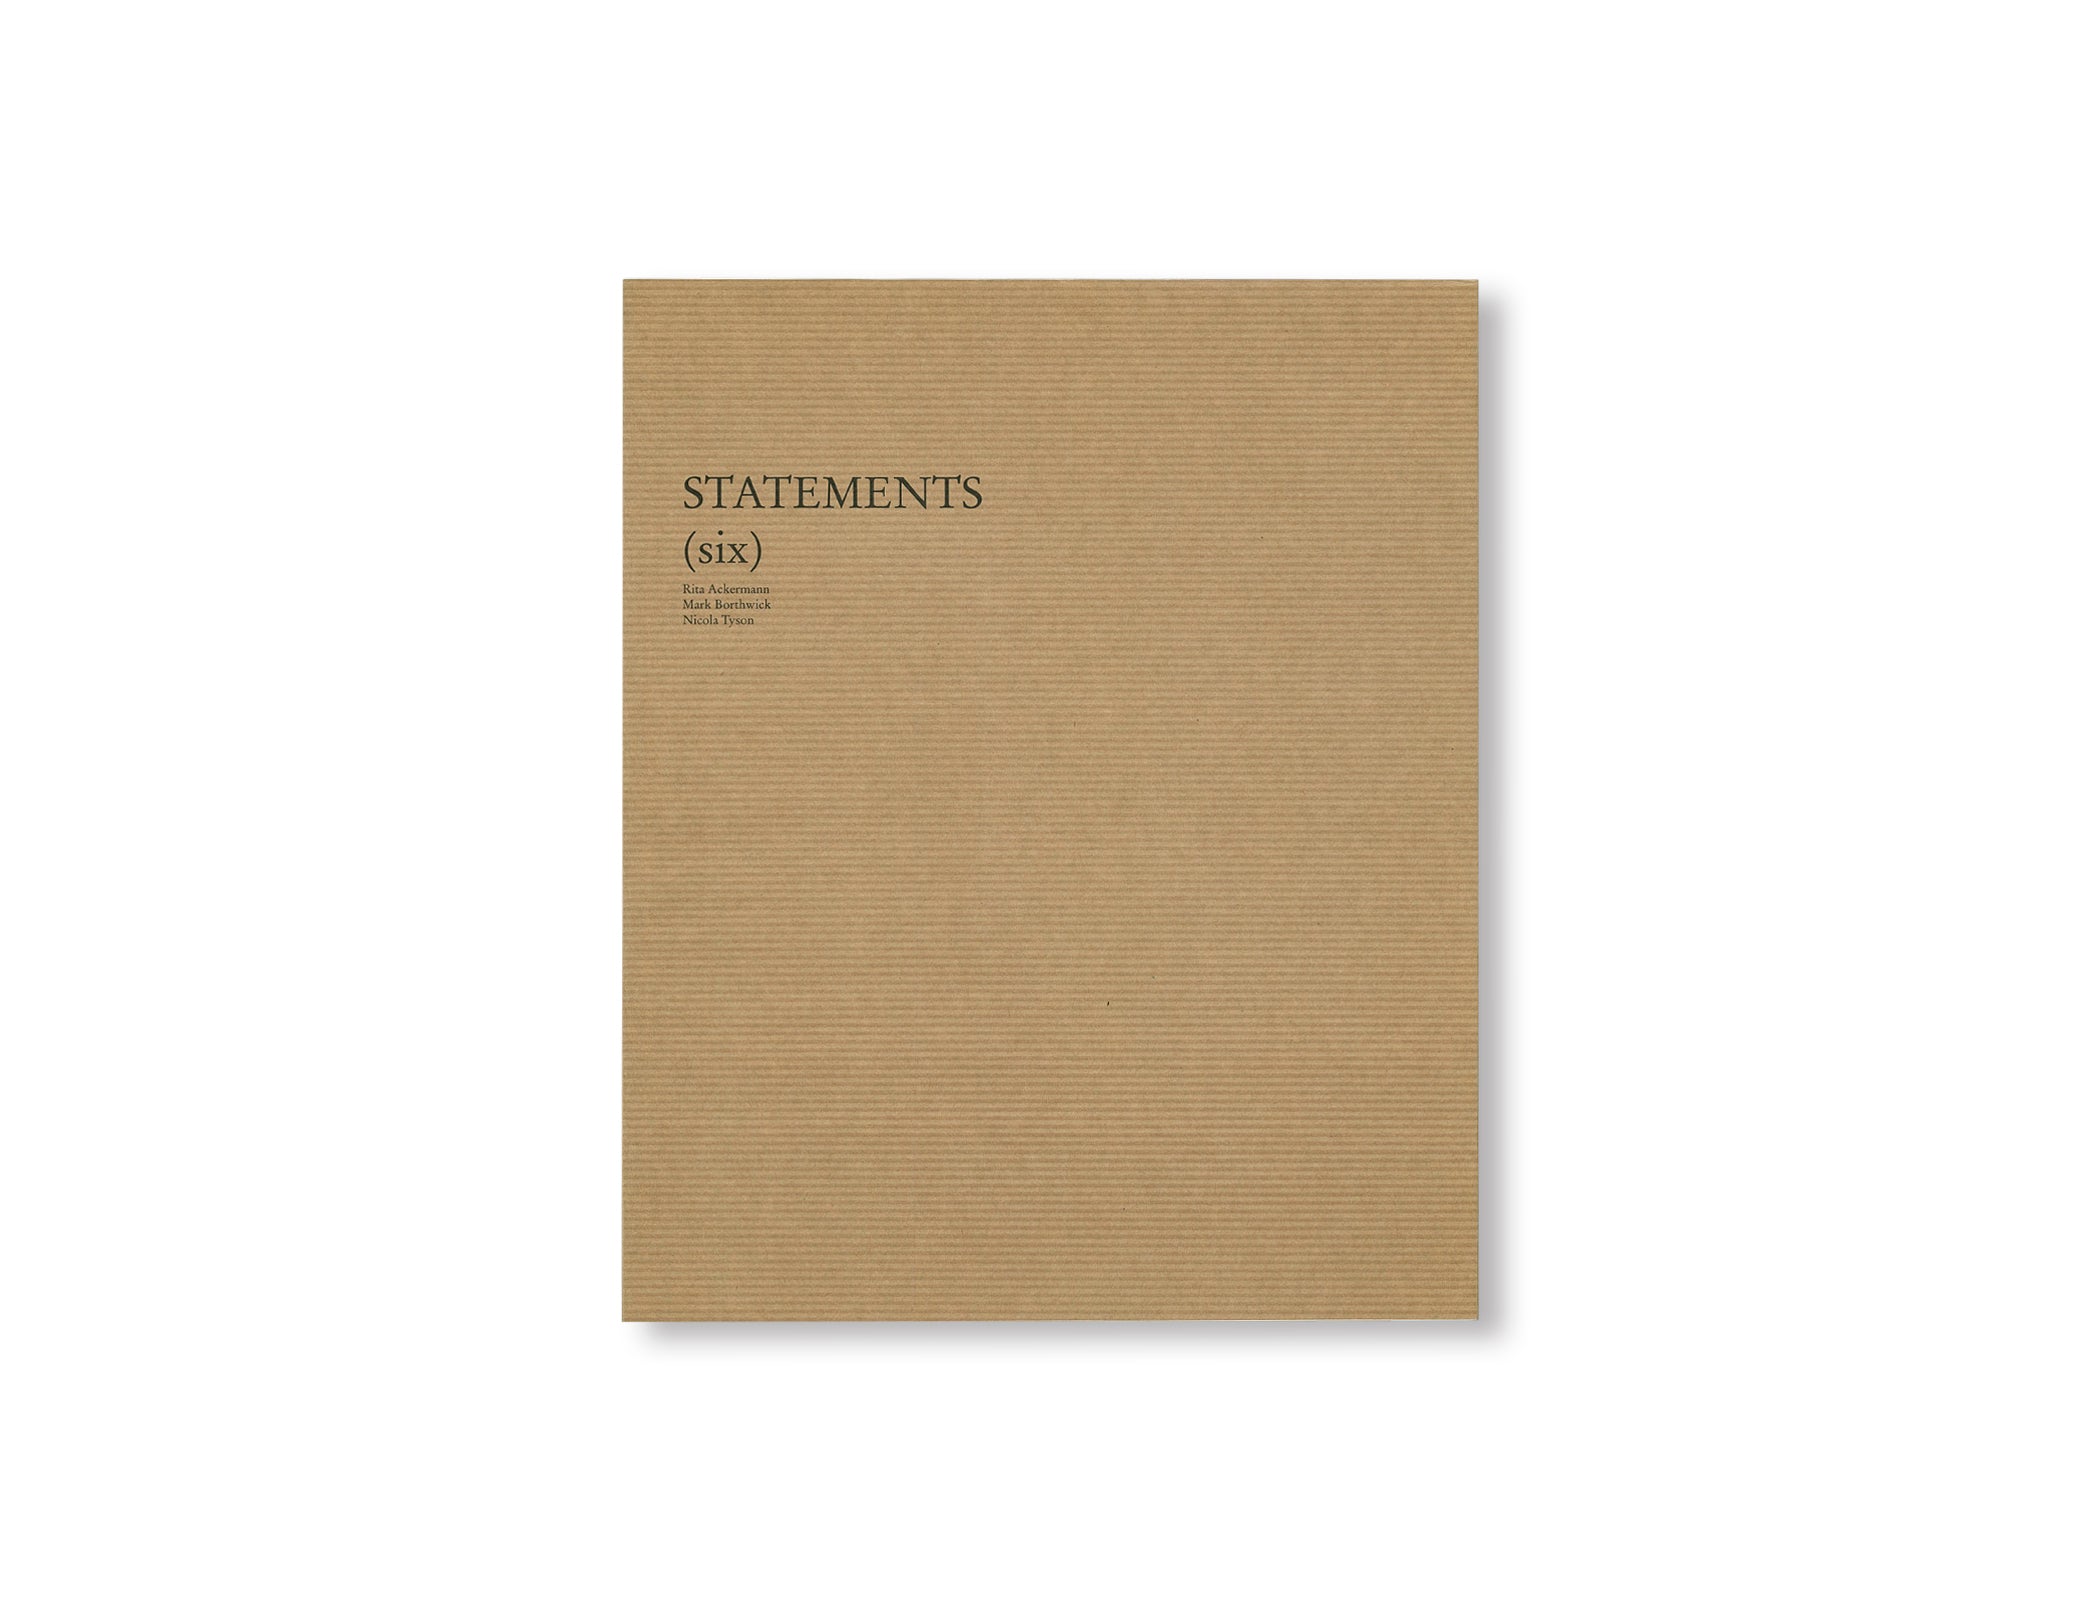 STATEMENTS (SIX) by Rita Ackermann, Mark Borthwick, Nicola Tyson